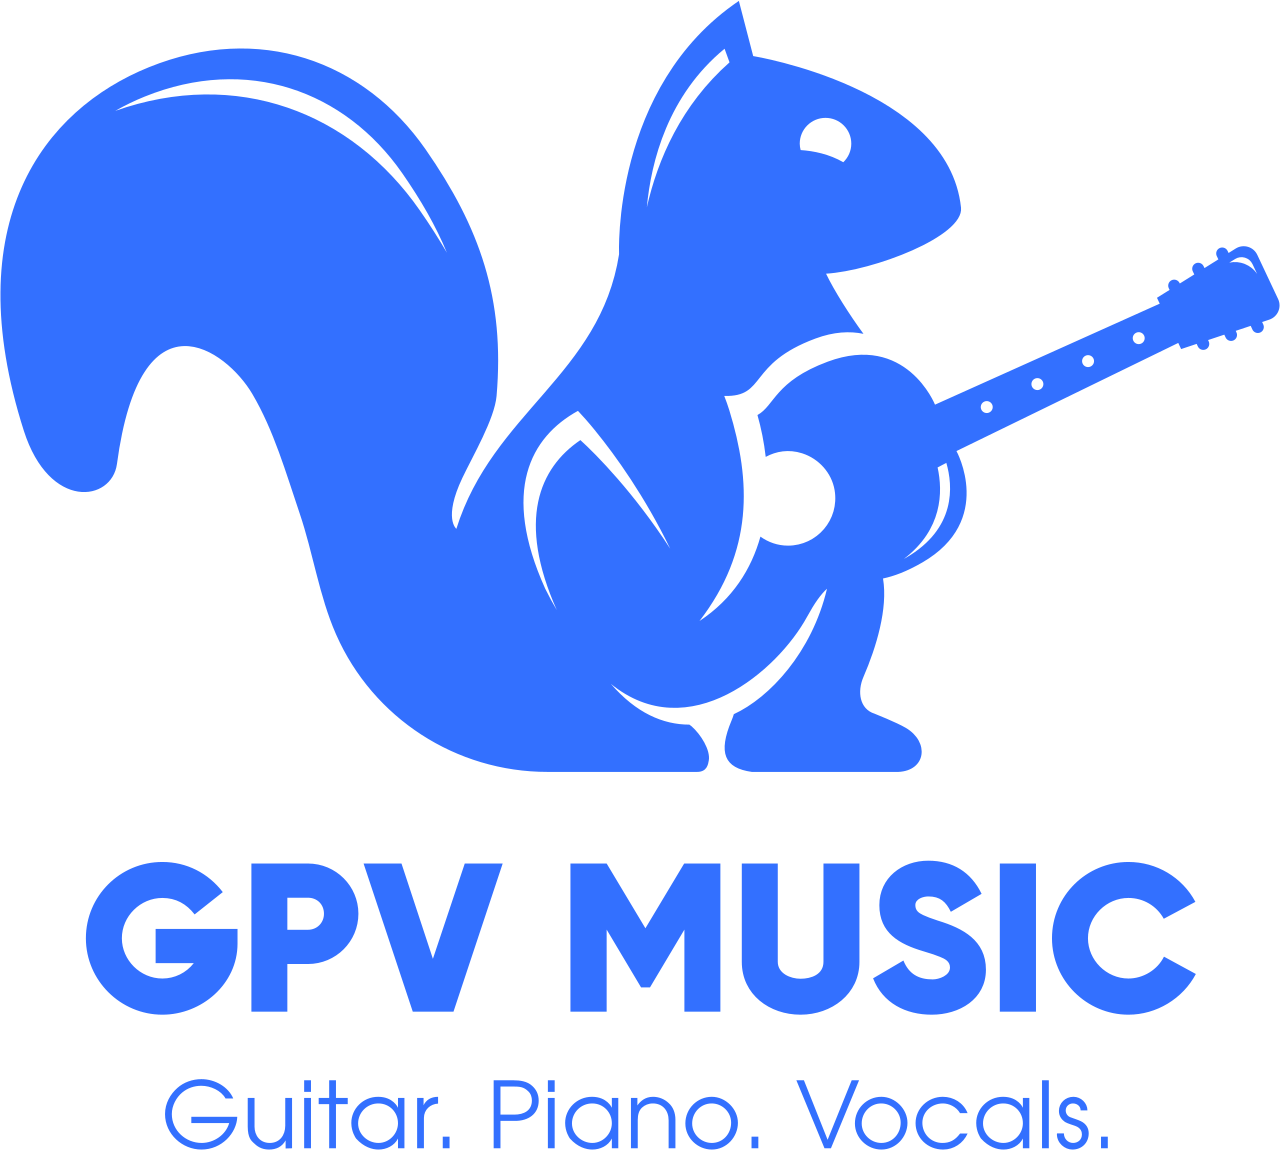 GPV Music's web page